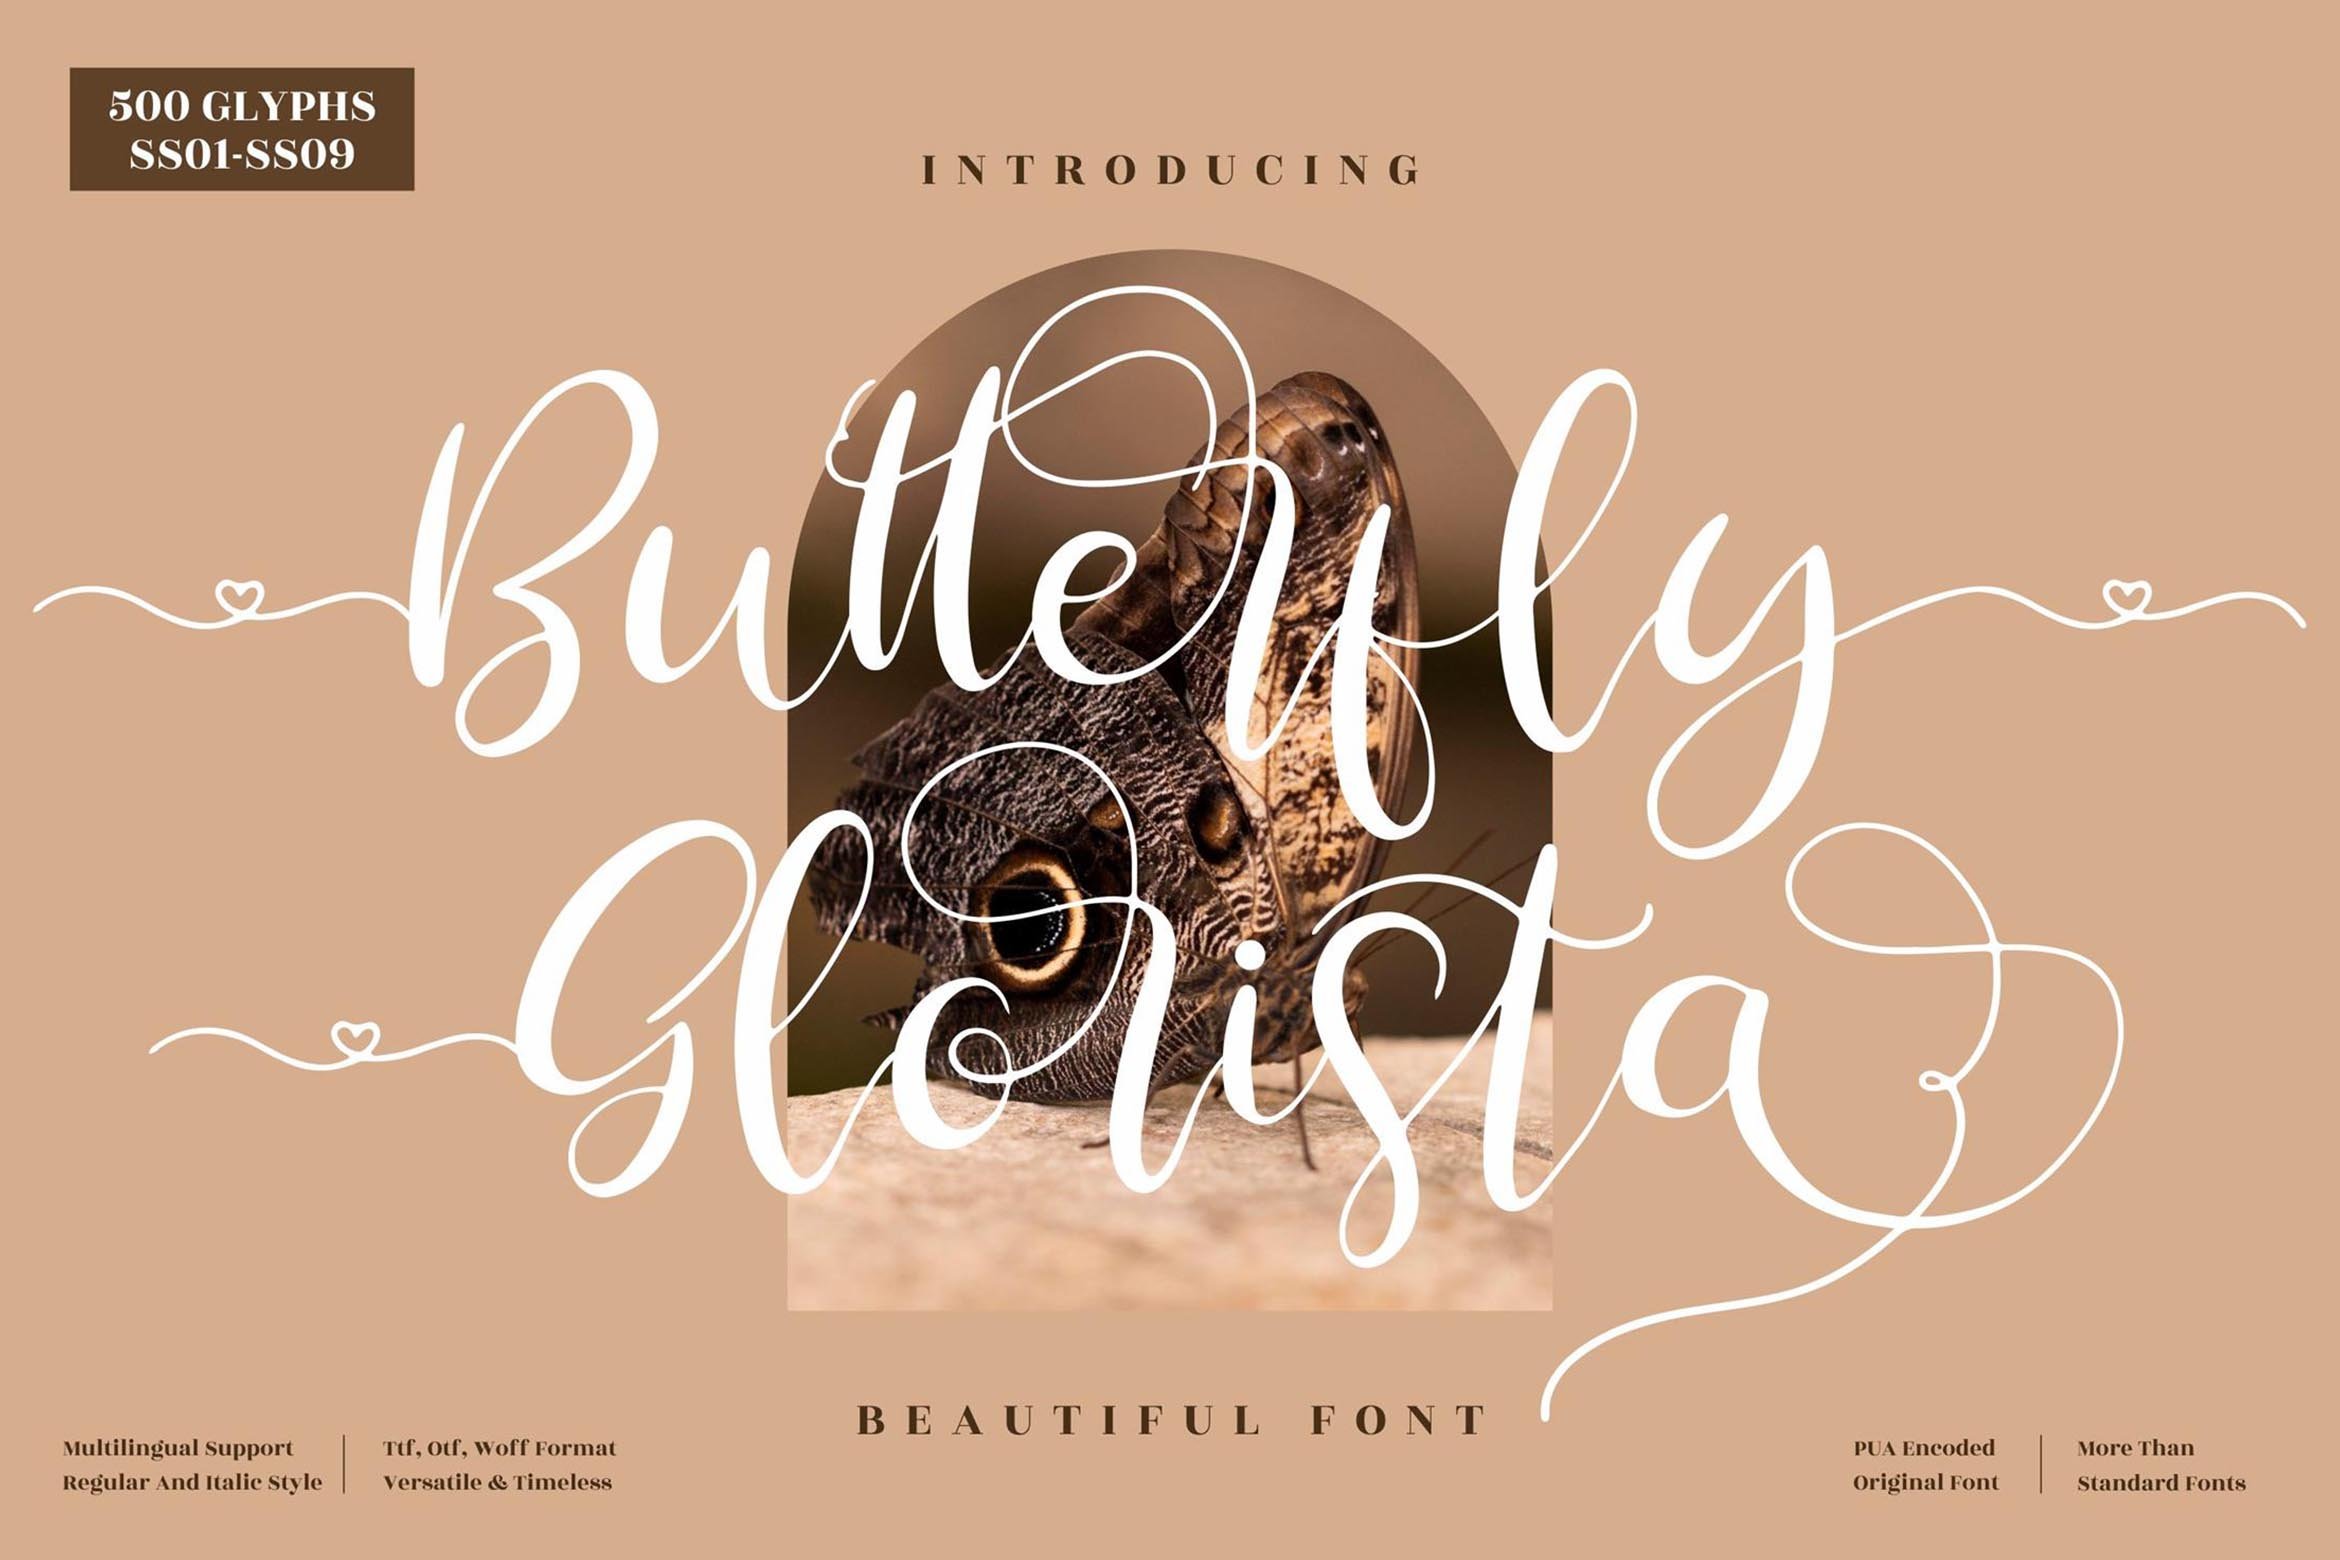 Butterfly Glorista Script LS cover image.